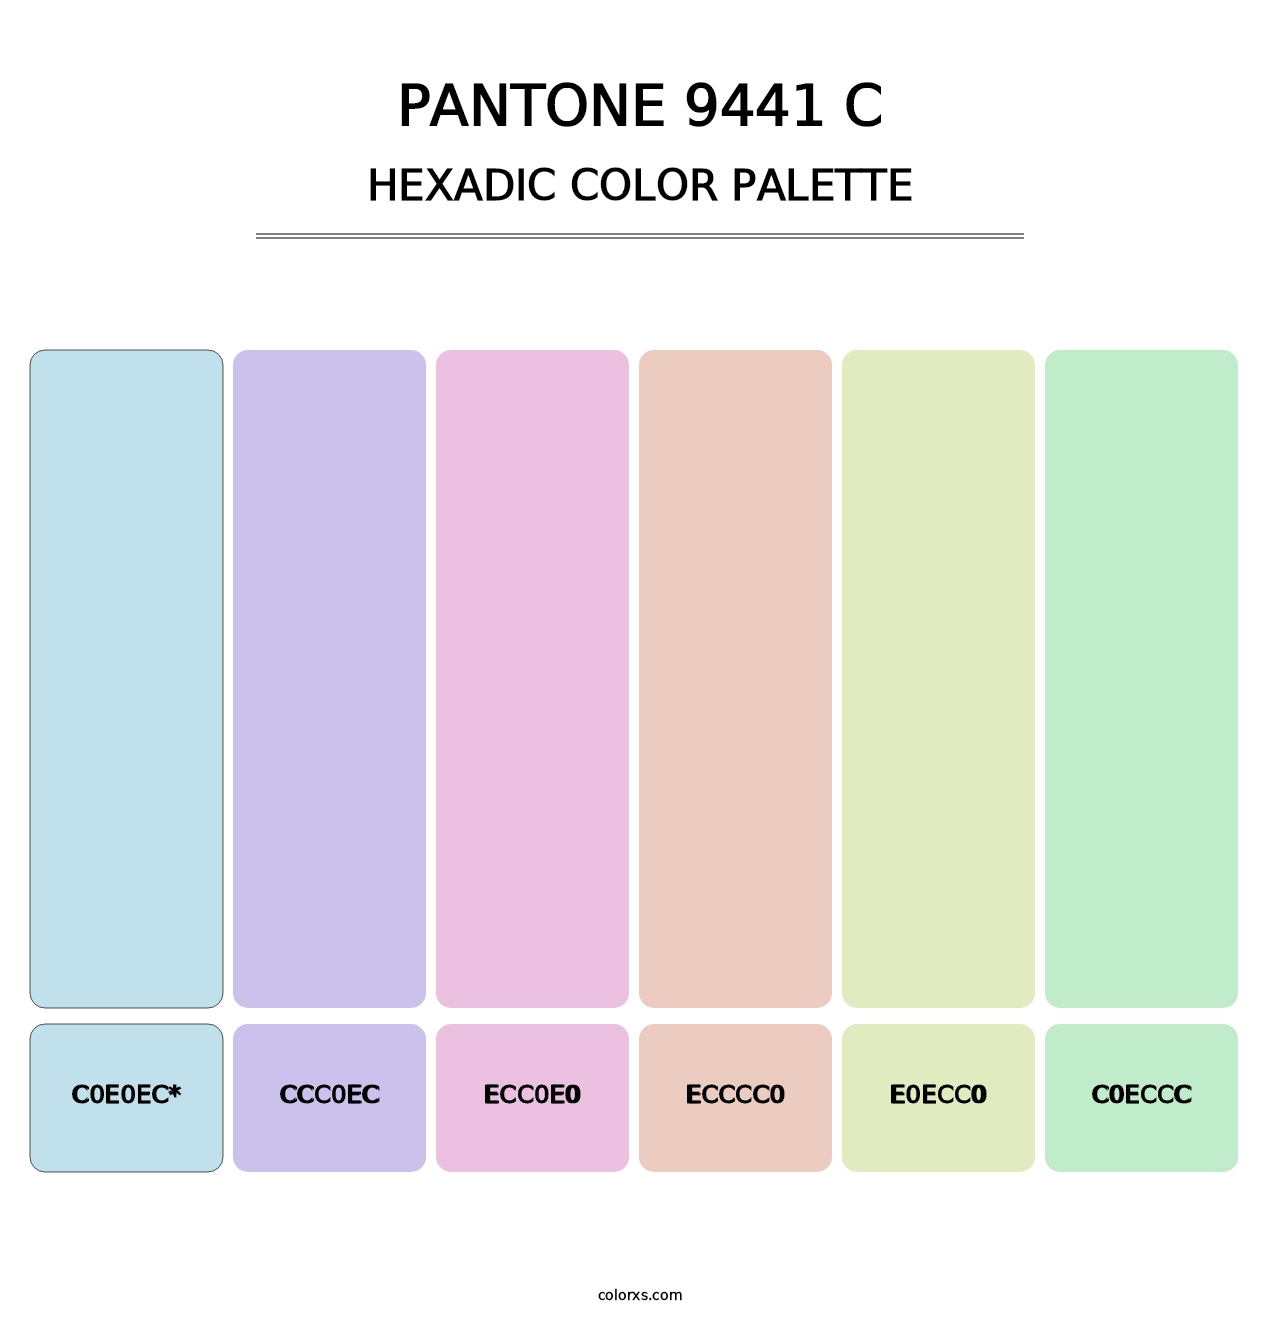 PANTONE 9441 C - Hexadic Color Palette